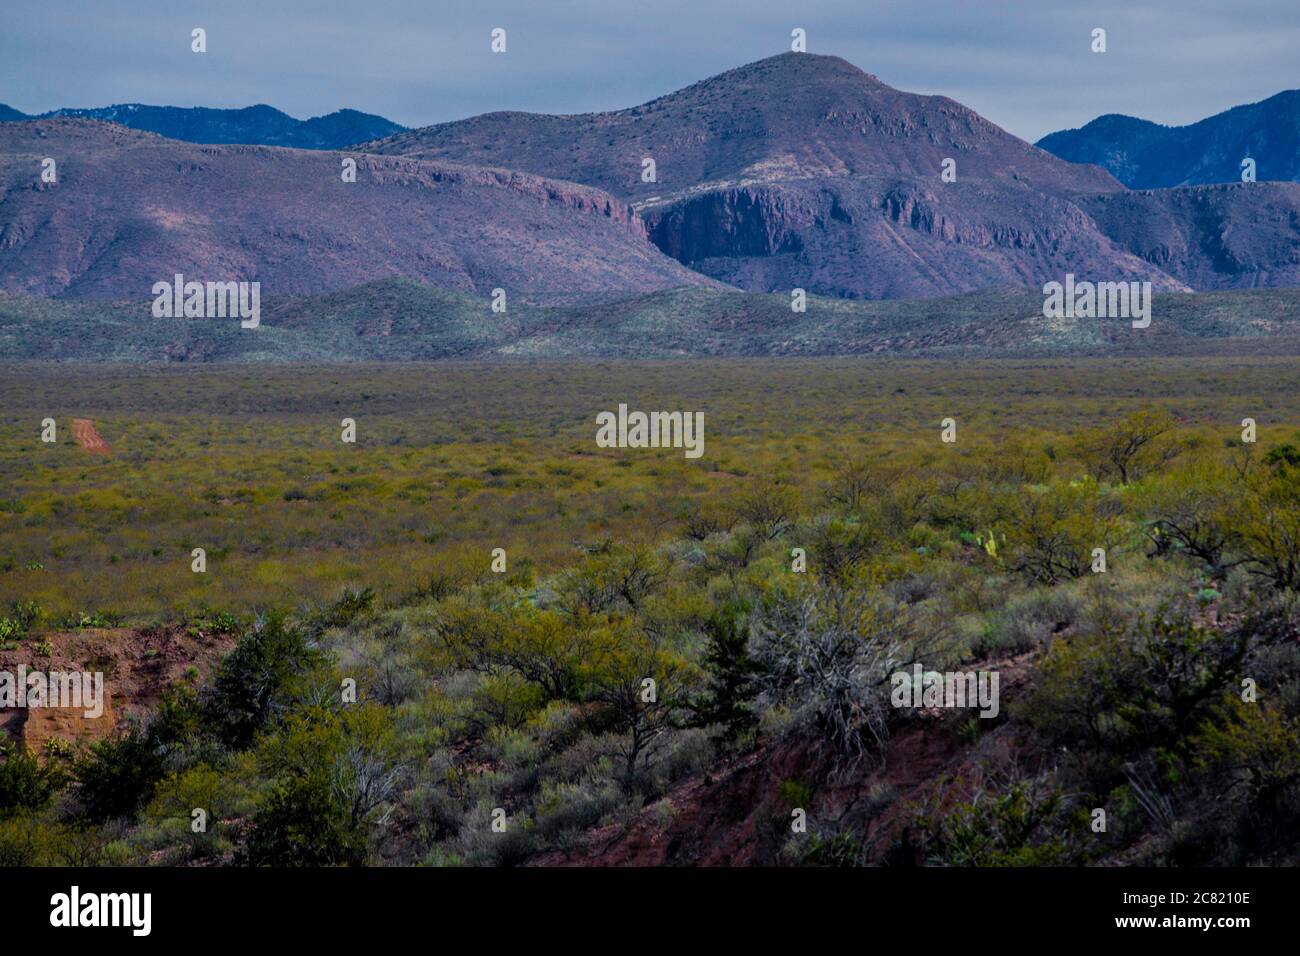 Landscape of the hills and desert vegetation of the Sierra Alta in Bavispe, Sonora, Mexico. desert. hillPaisaje de los cerros y vegetacion desertica d Stock Photo